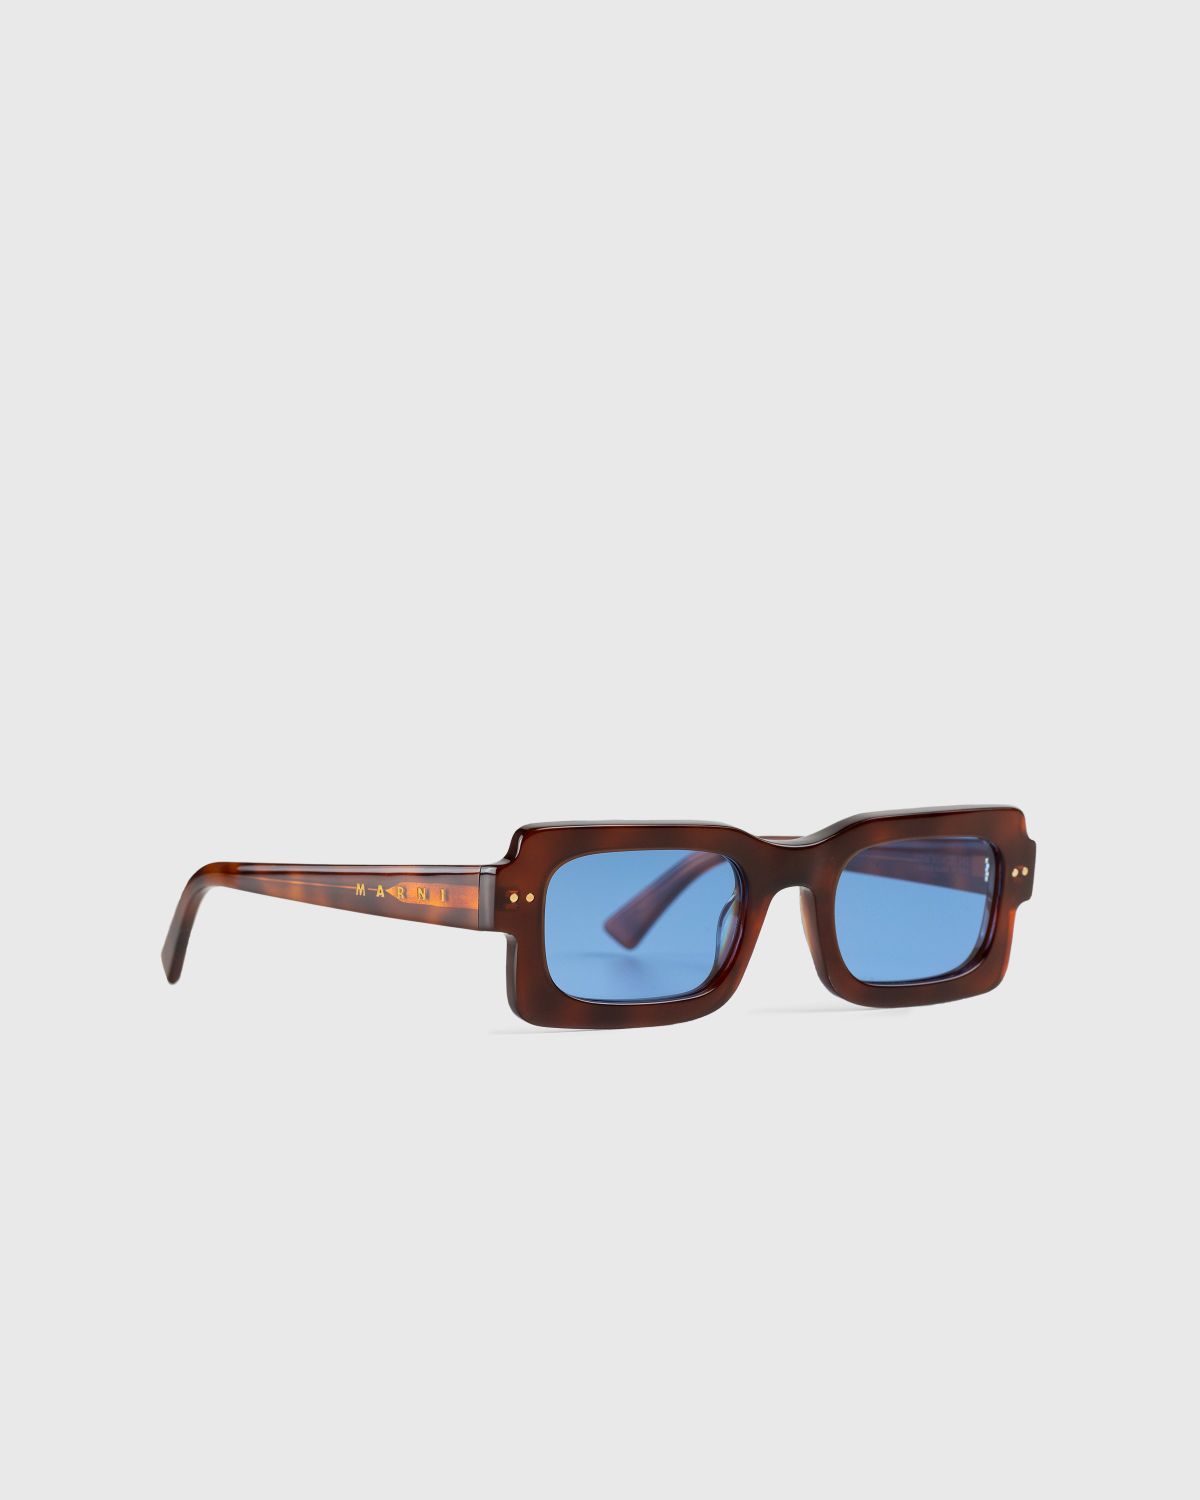 Marni – Lake Vostok Sunglasses Havana Blue - Sunglasses - Blue - Image 2